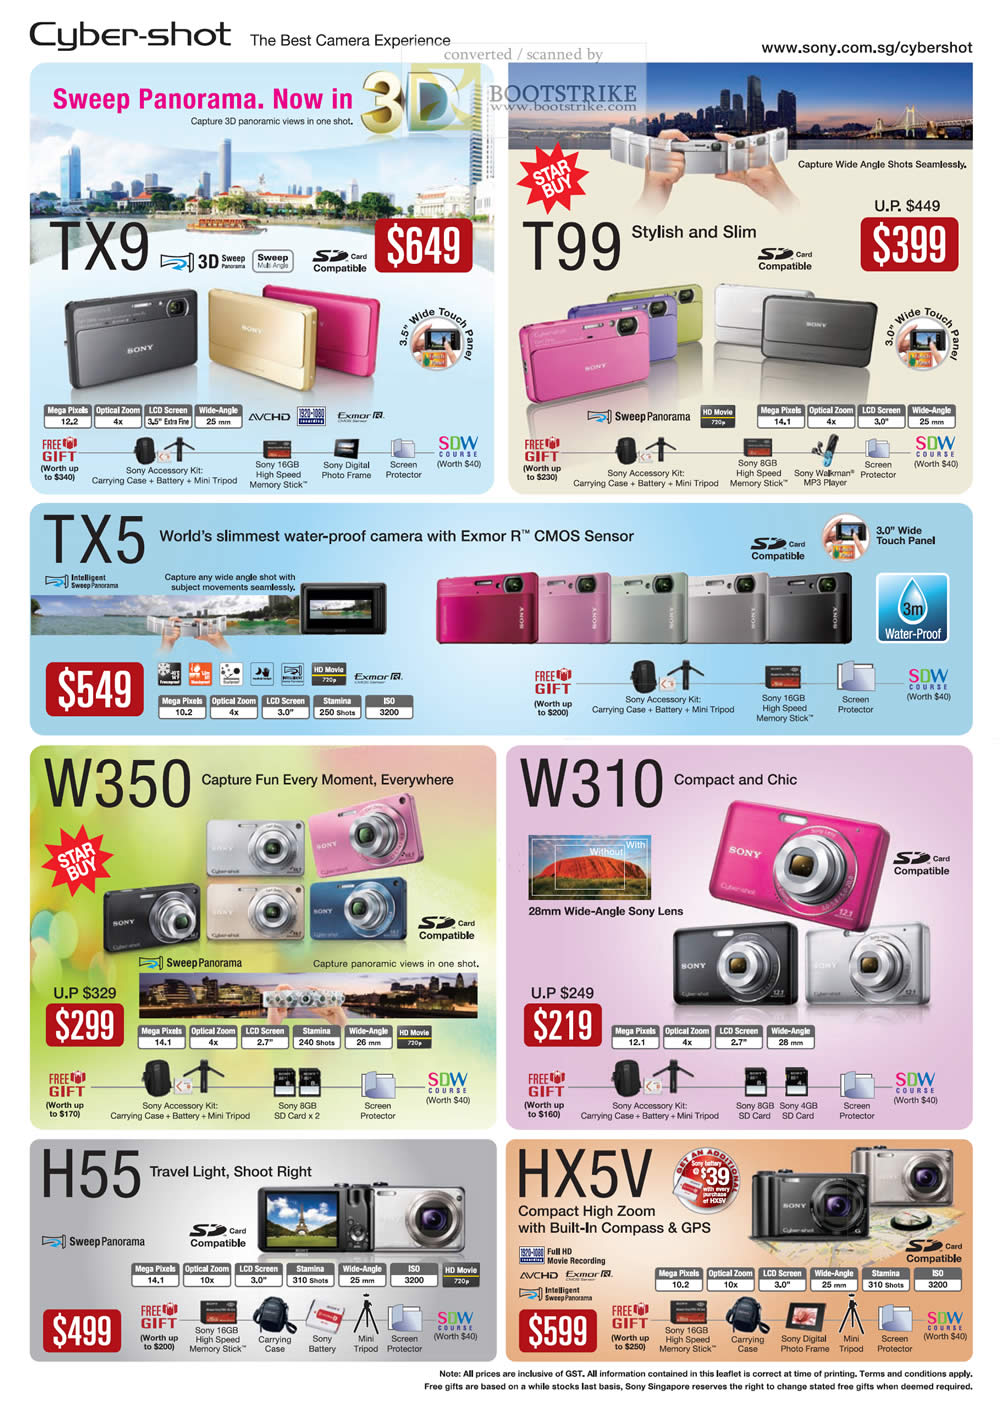 Sitex 2010 price list image brochure of Sony Digital Cameras Cybershot TX9 T99 TX5 W350 W310 H55 HX5V